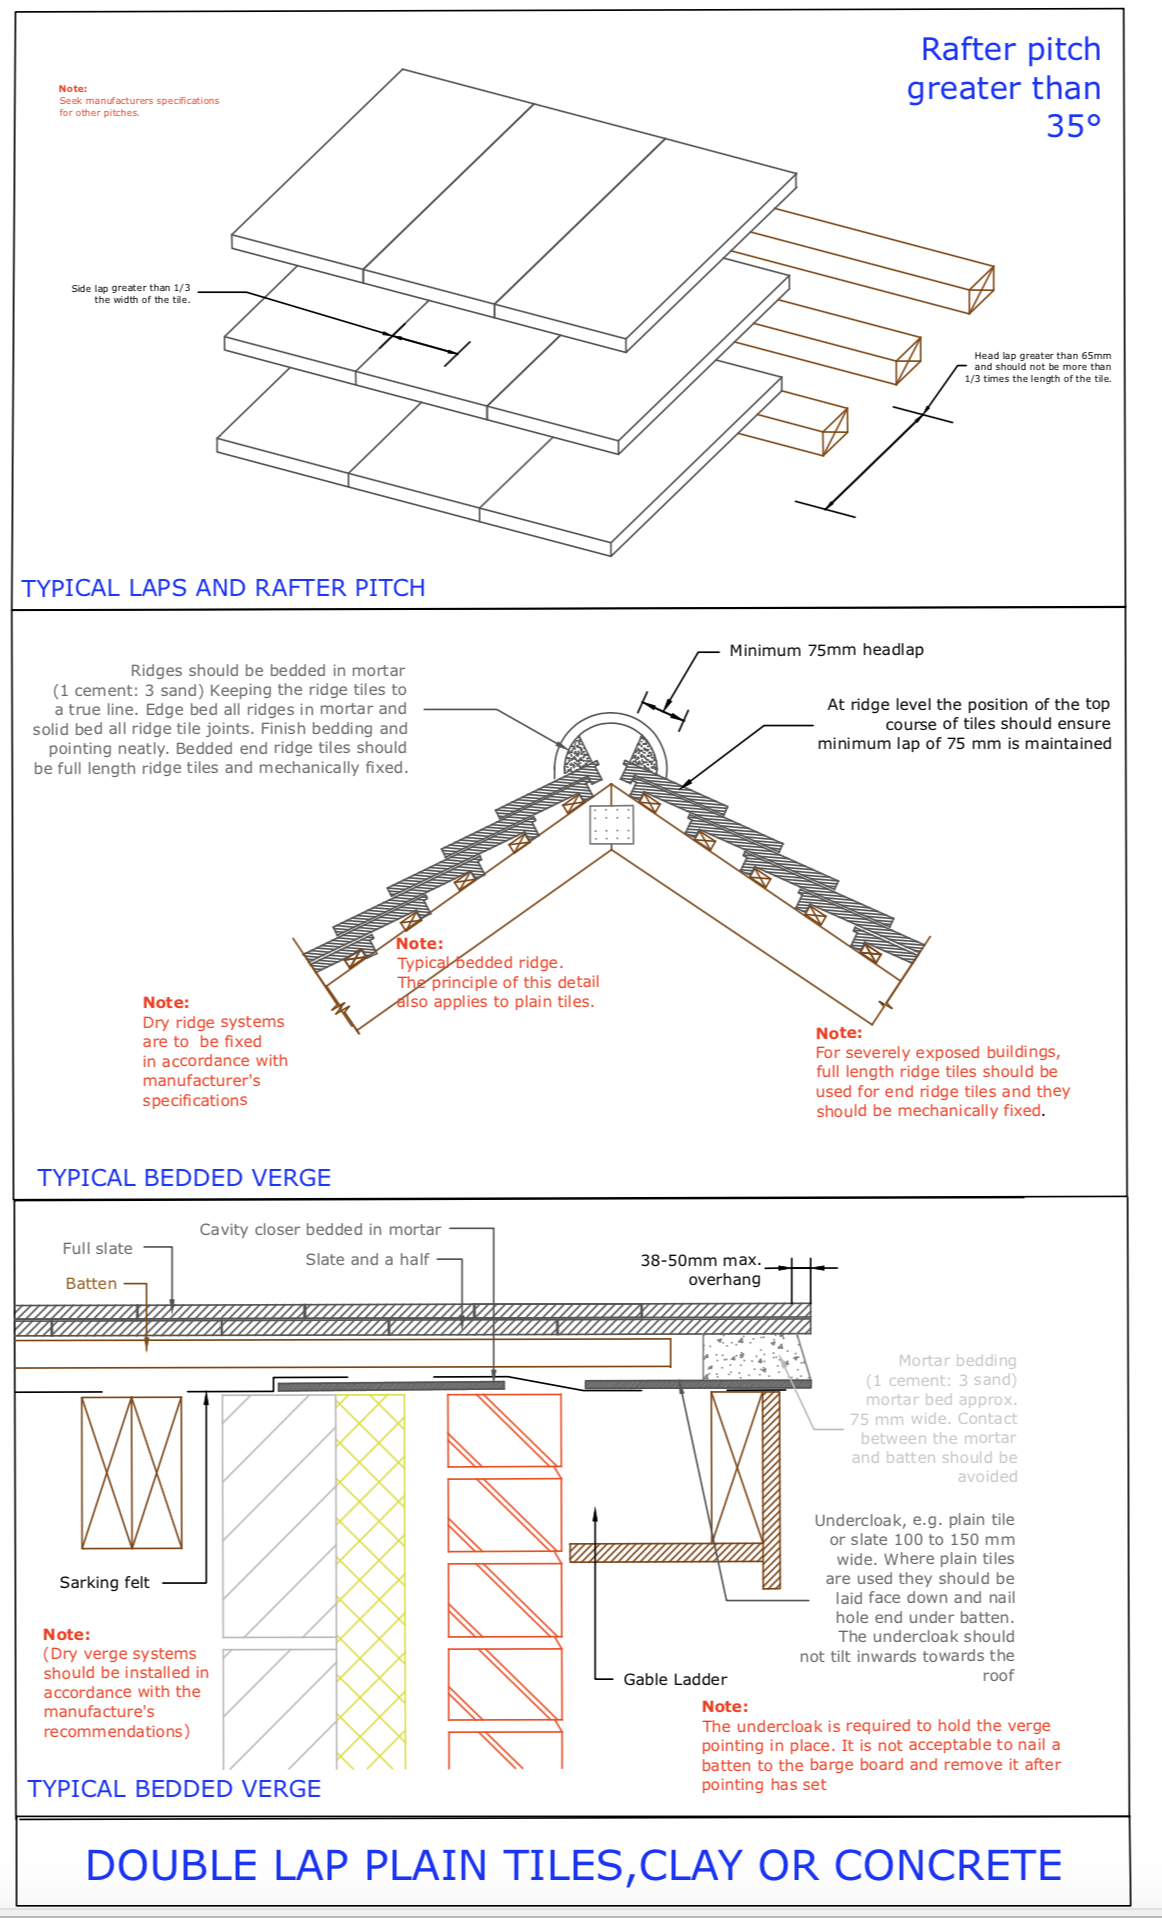 Diagram D99 - Double lap plain tiles rafter greater than 35 deg